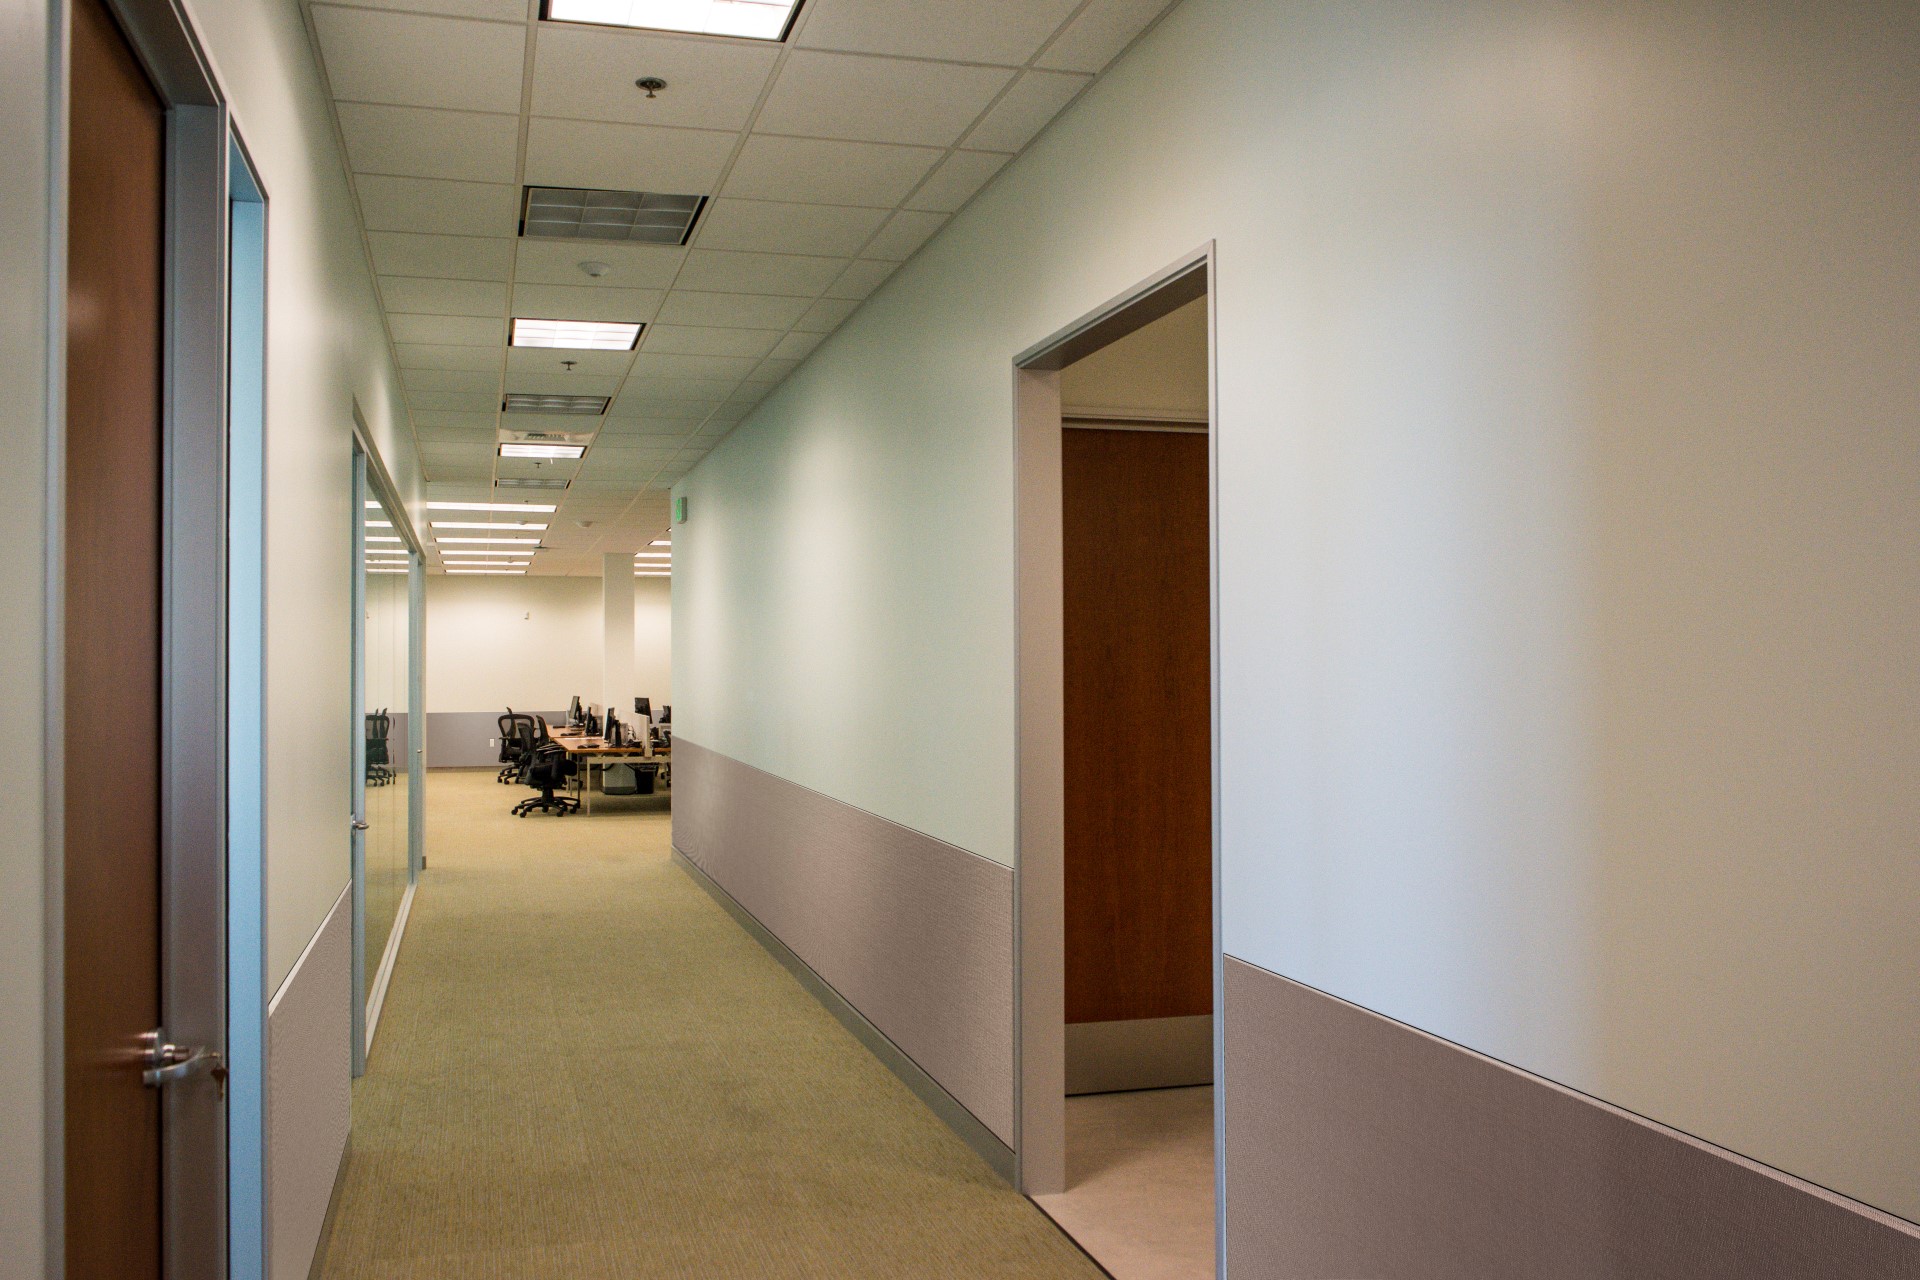 Hallways - Fabricmate Systems, Inc.